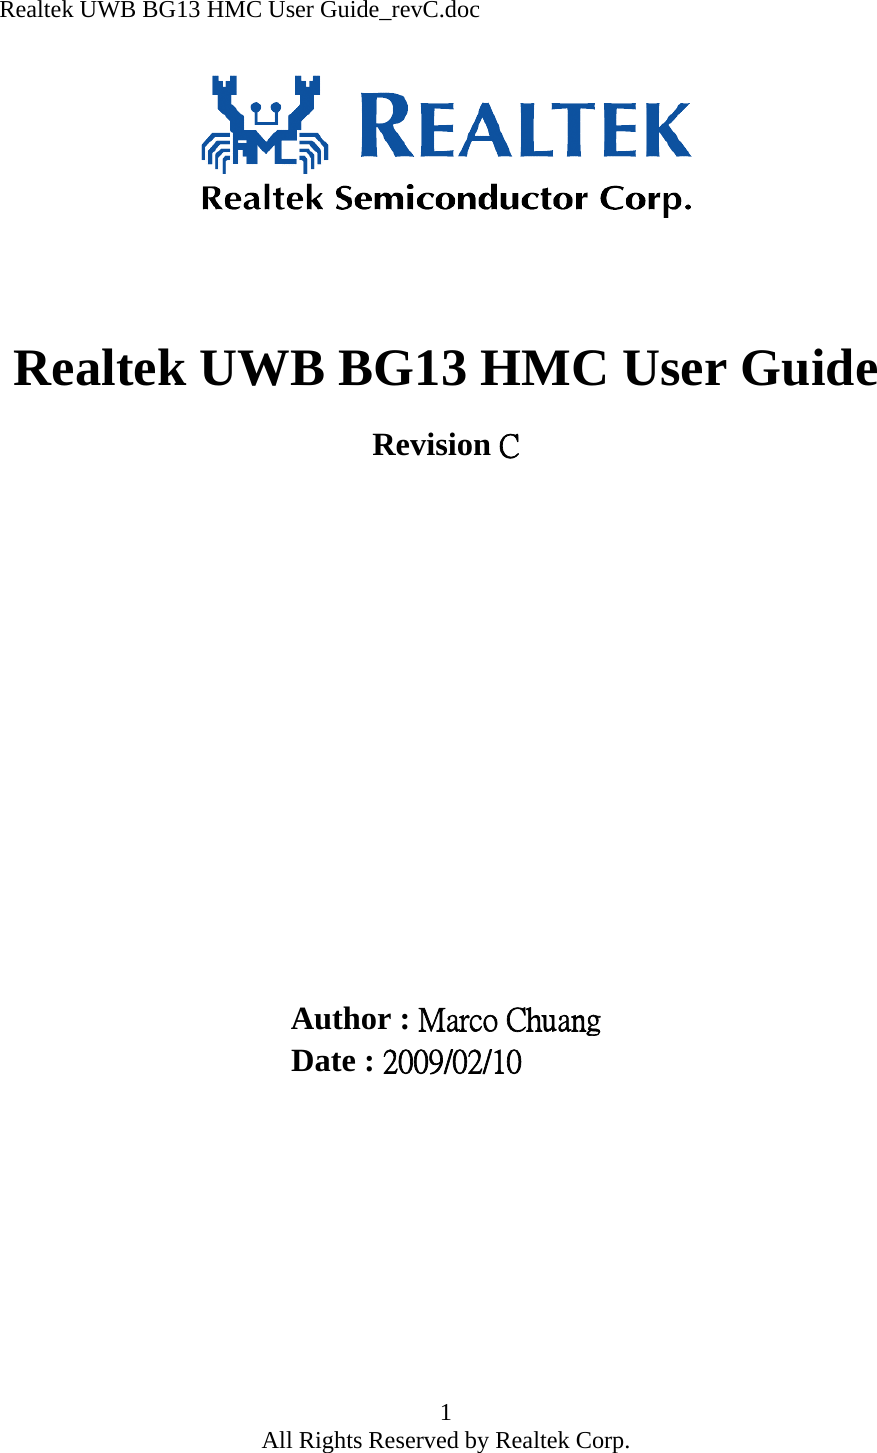 Realtek UWB BG13 HMC User Guide_revC.doc 1 All Rights Reserved by Realtek Corp.       Realtek UWB BG13 HMC User Guide   Revision C                    Author : Marco Chuang                                     Date : 2009/02/10    